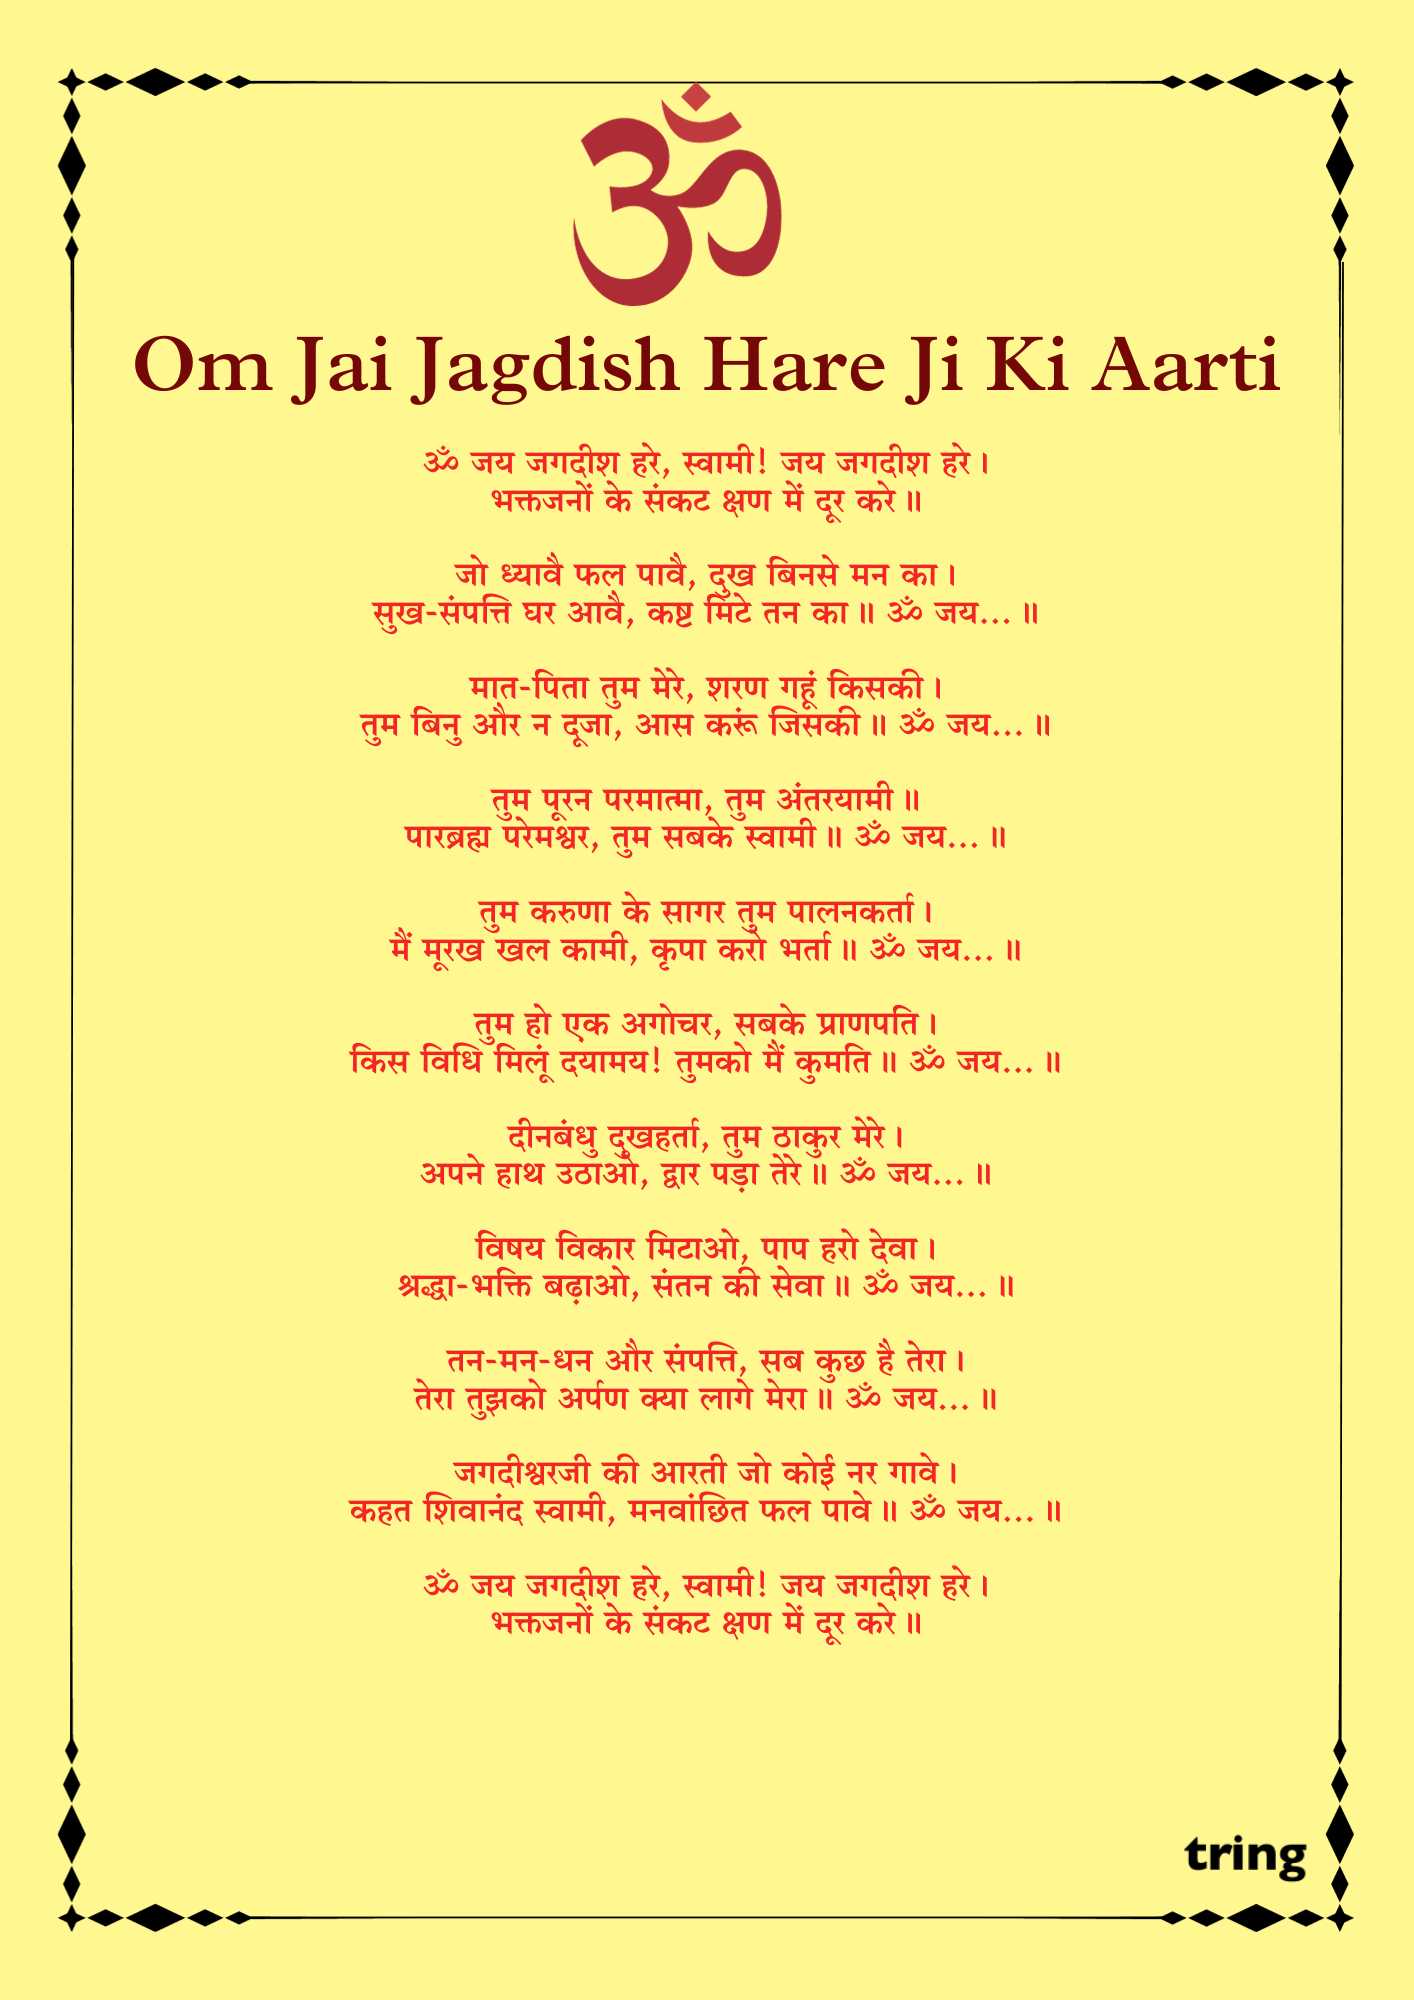 Om Jai Jagdish Hare Ji Ki Aarti Images